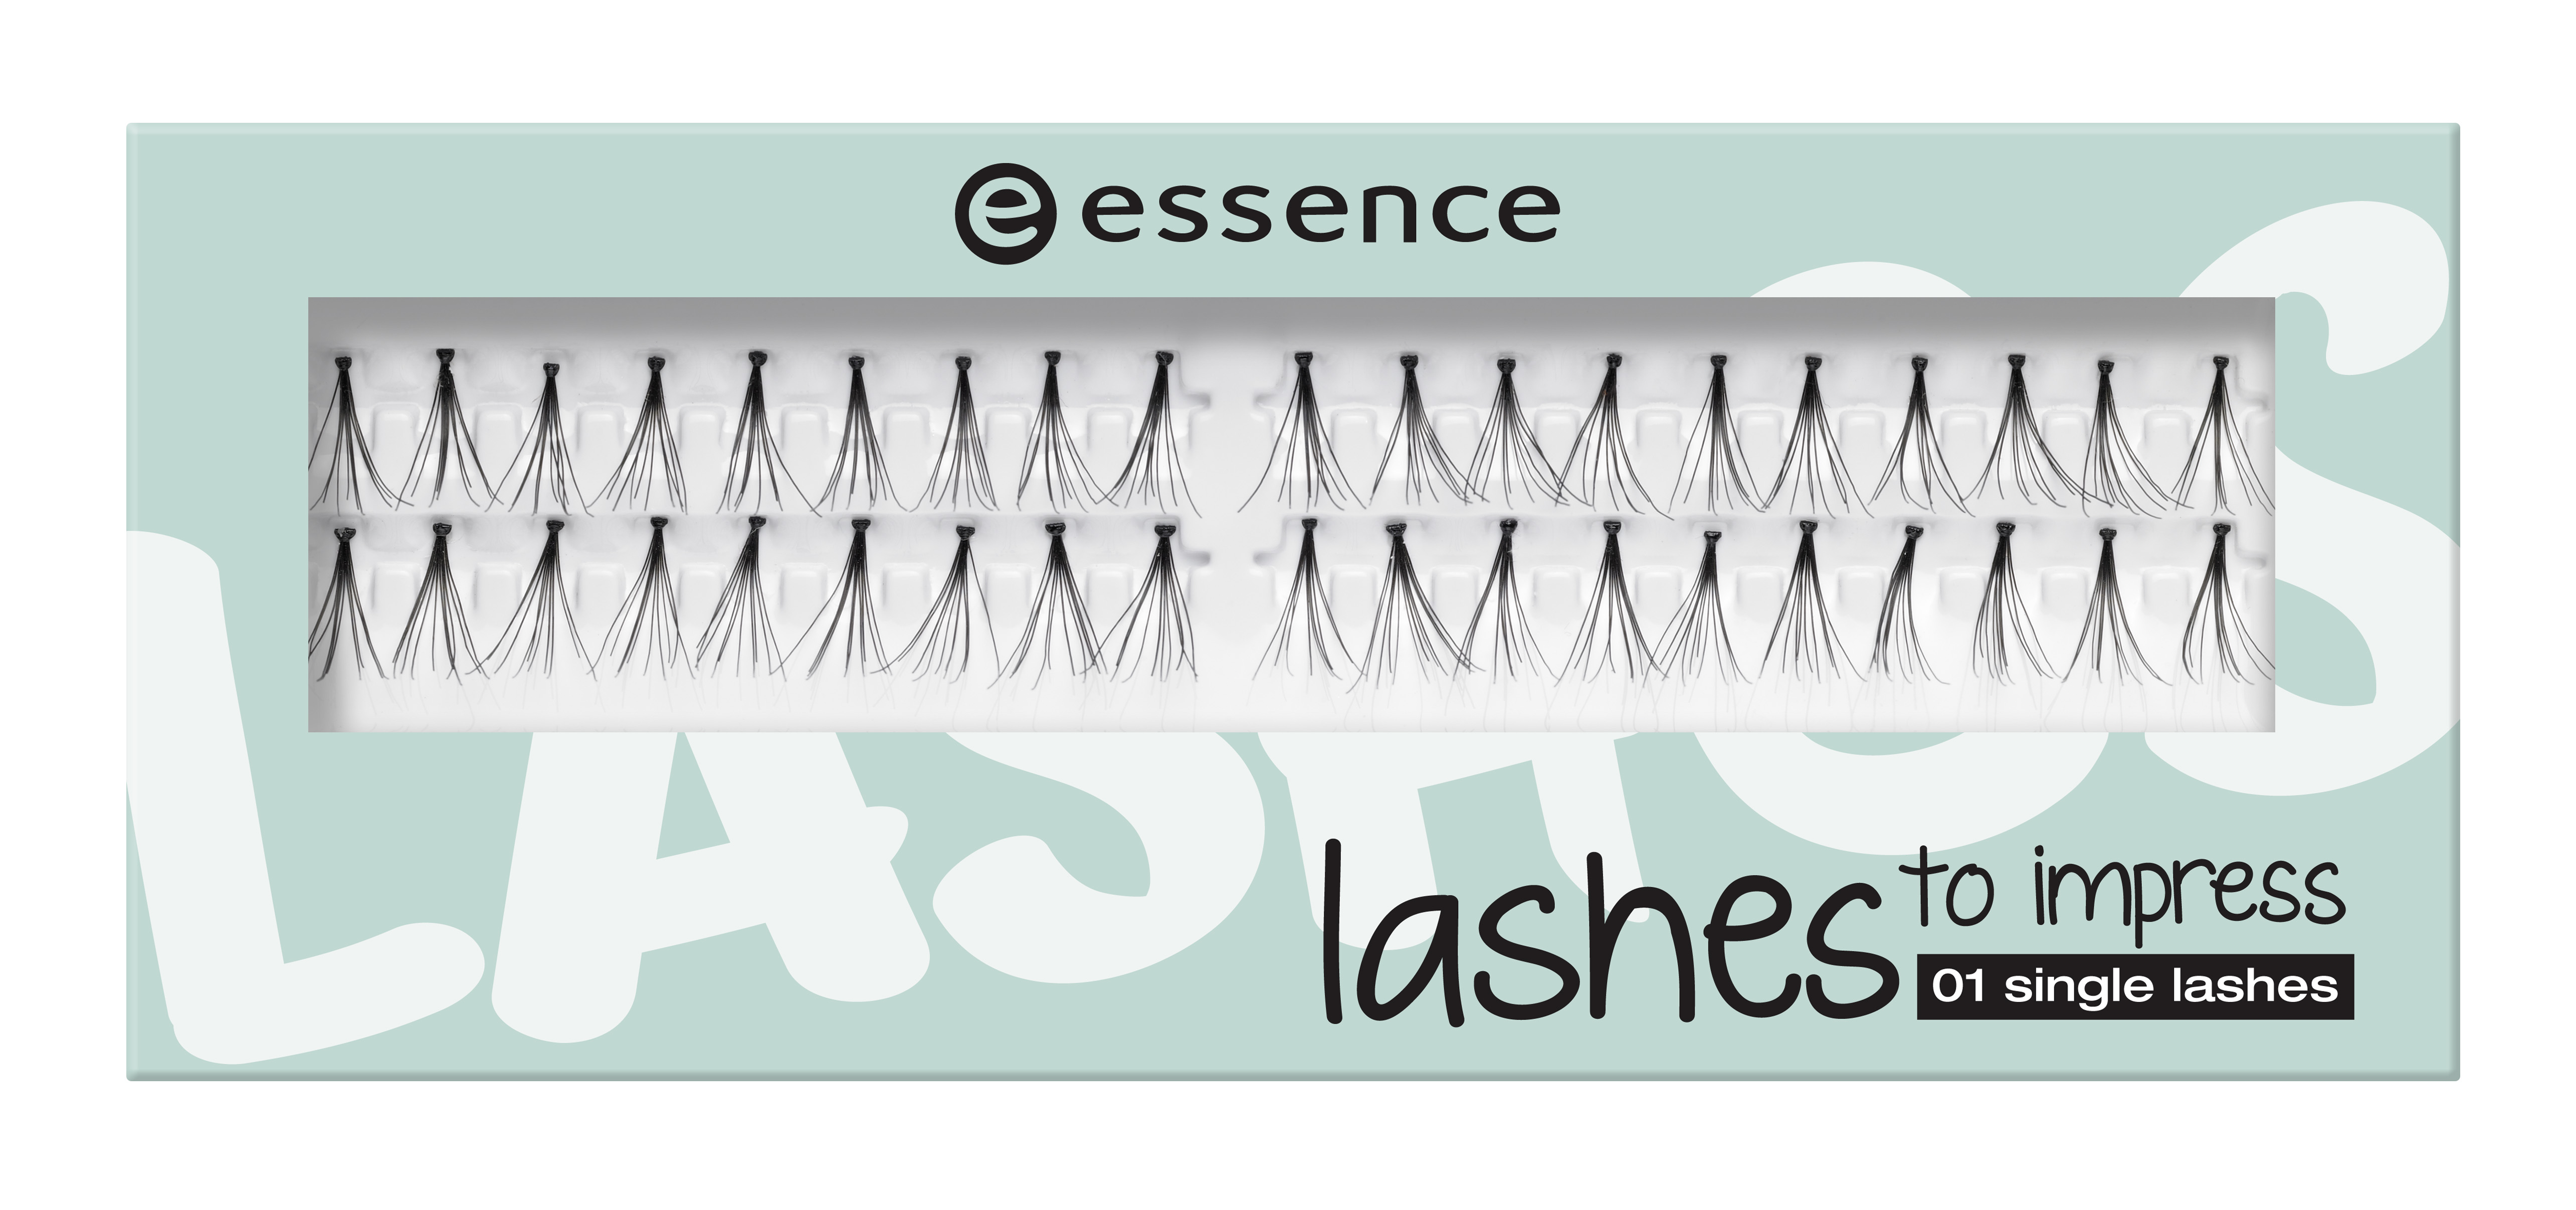 essence lashes to impress 01